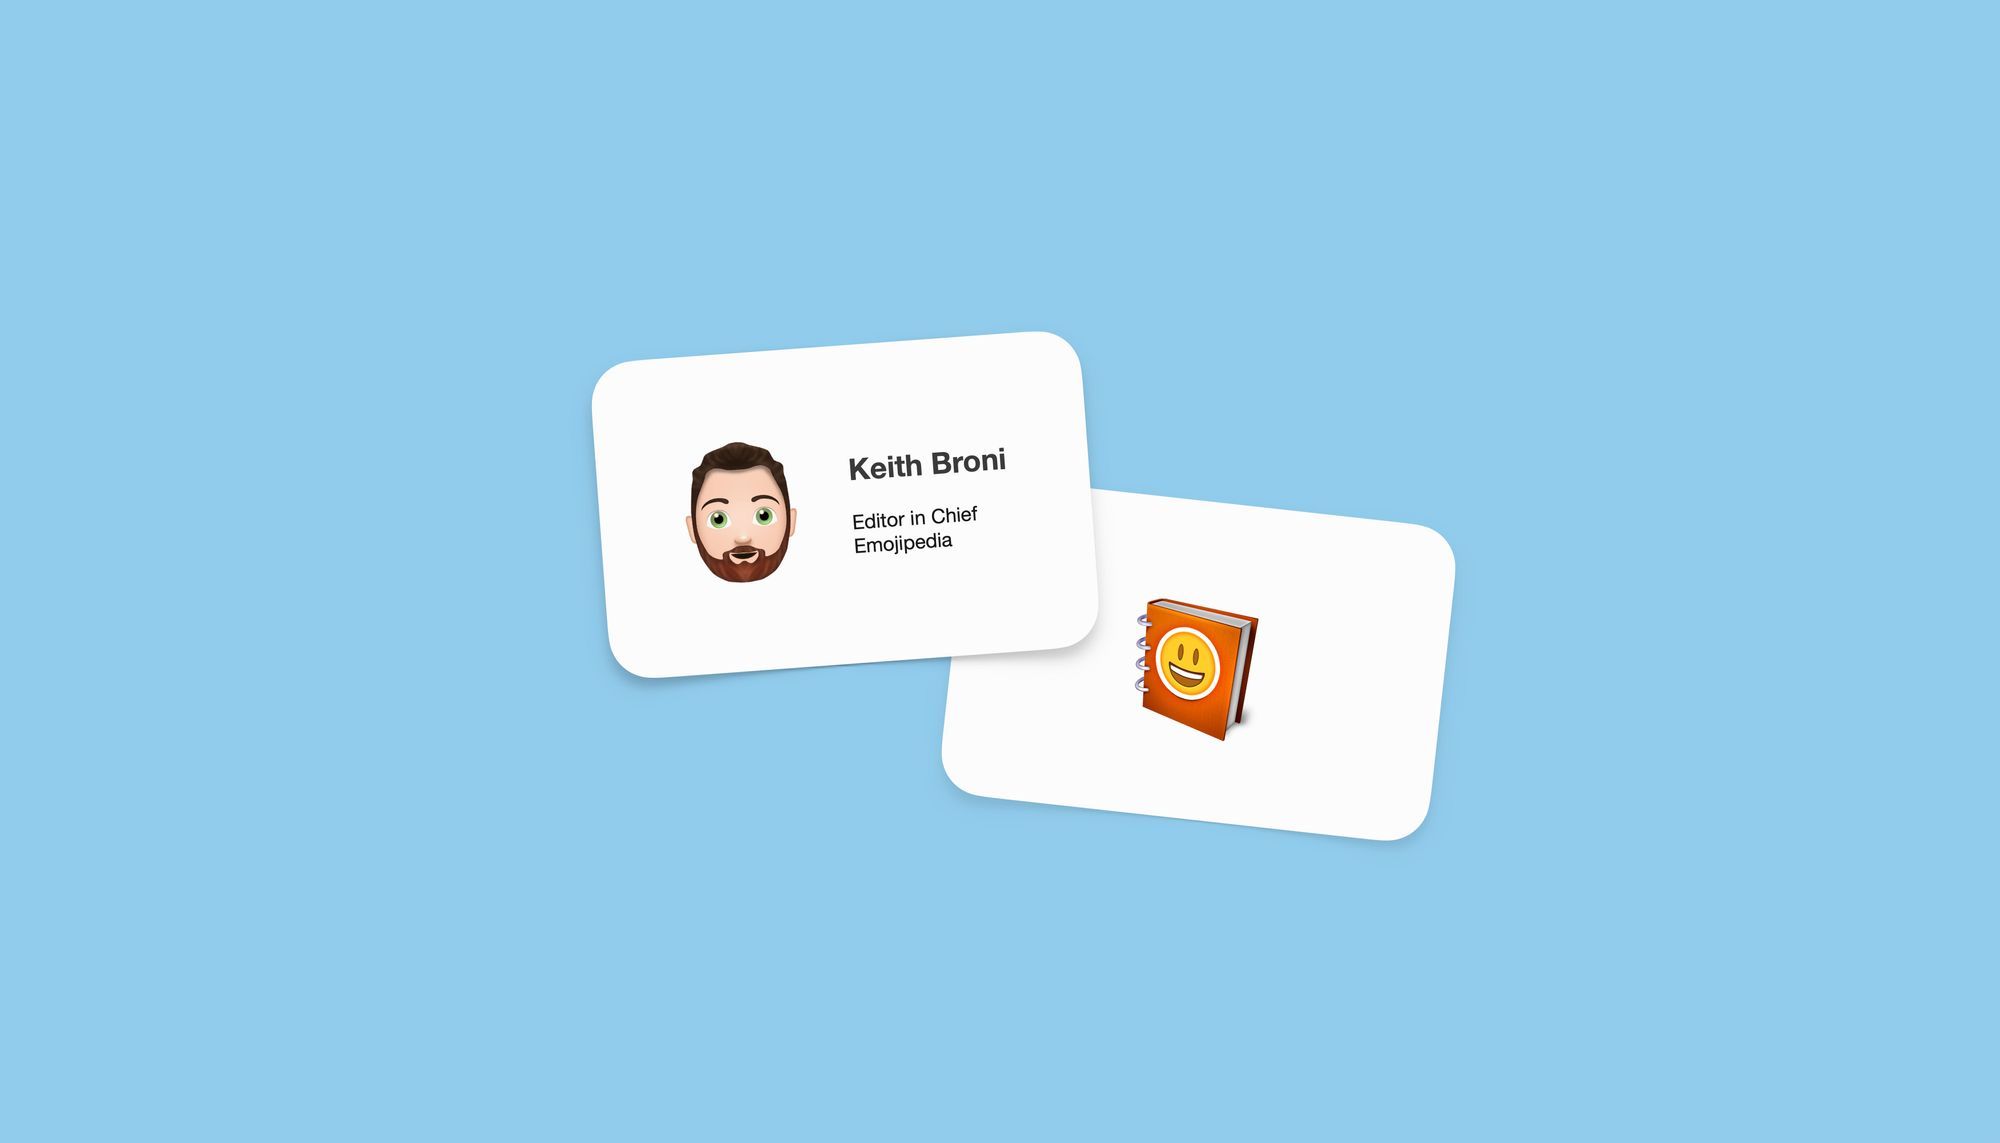 Keith Broni is Emojipedia's New Editor in Chief